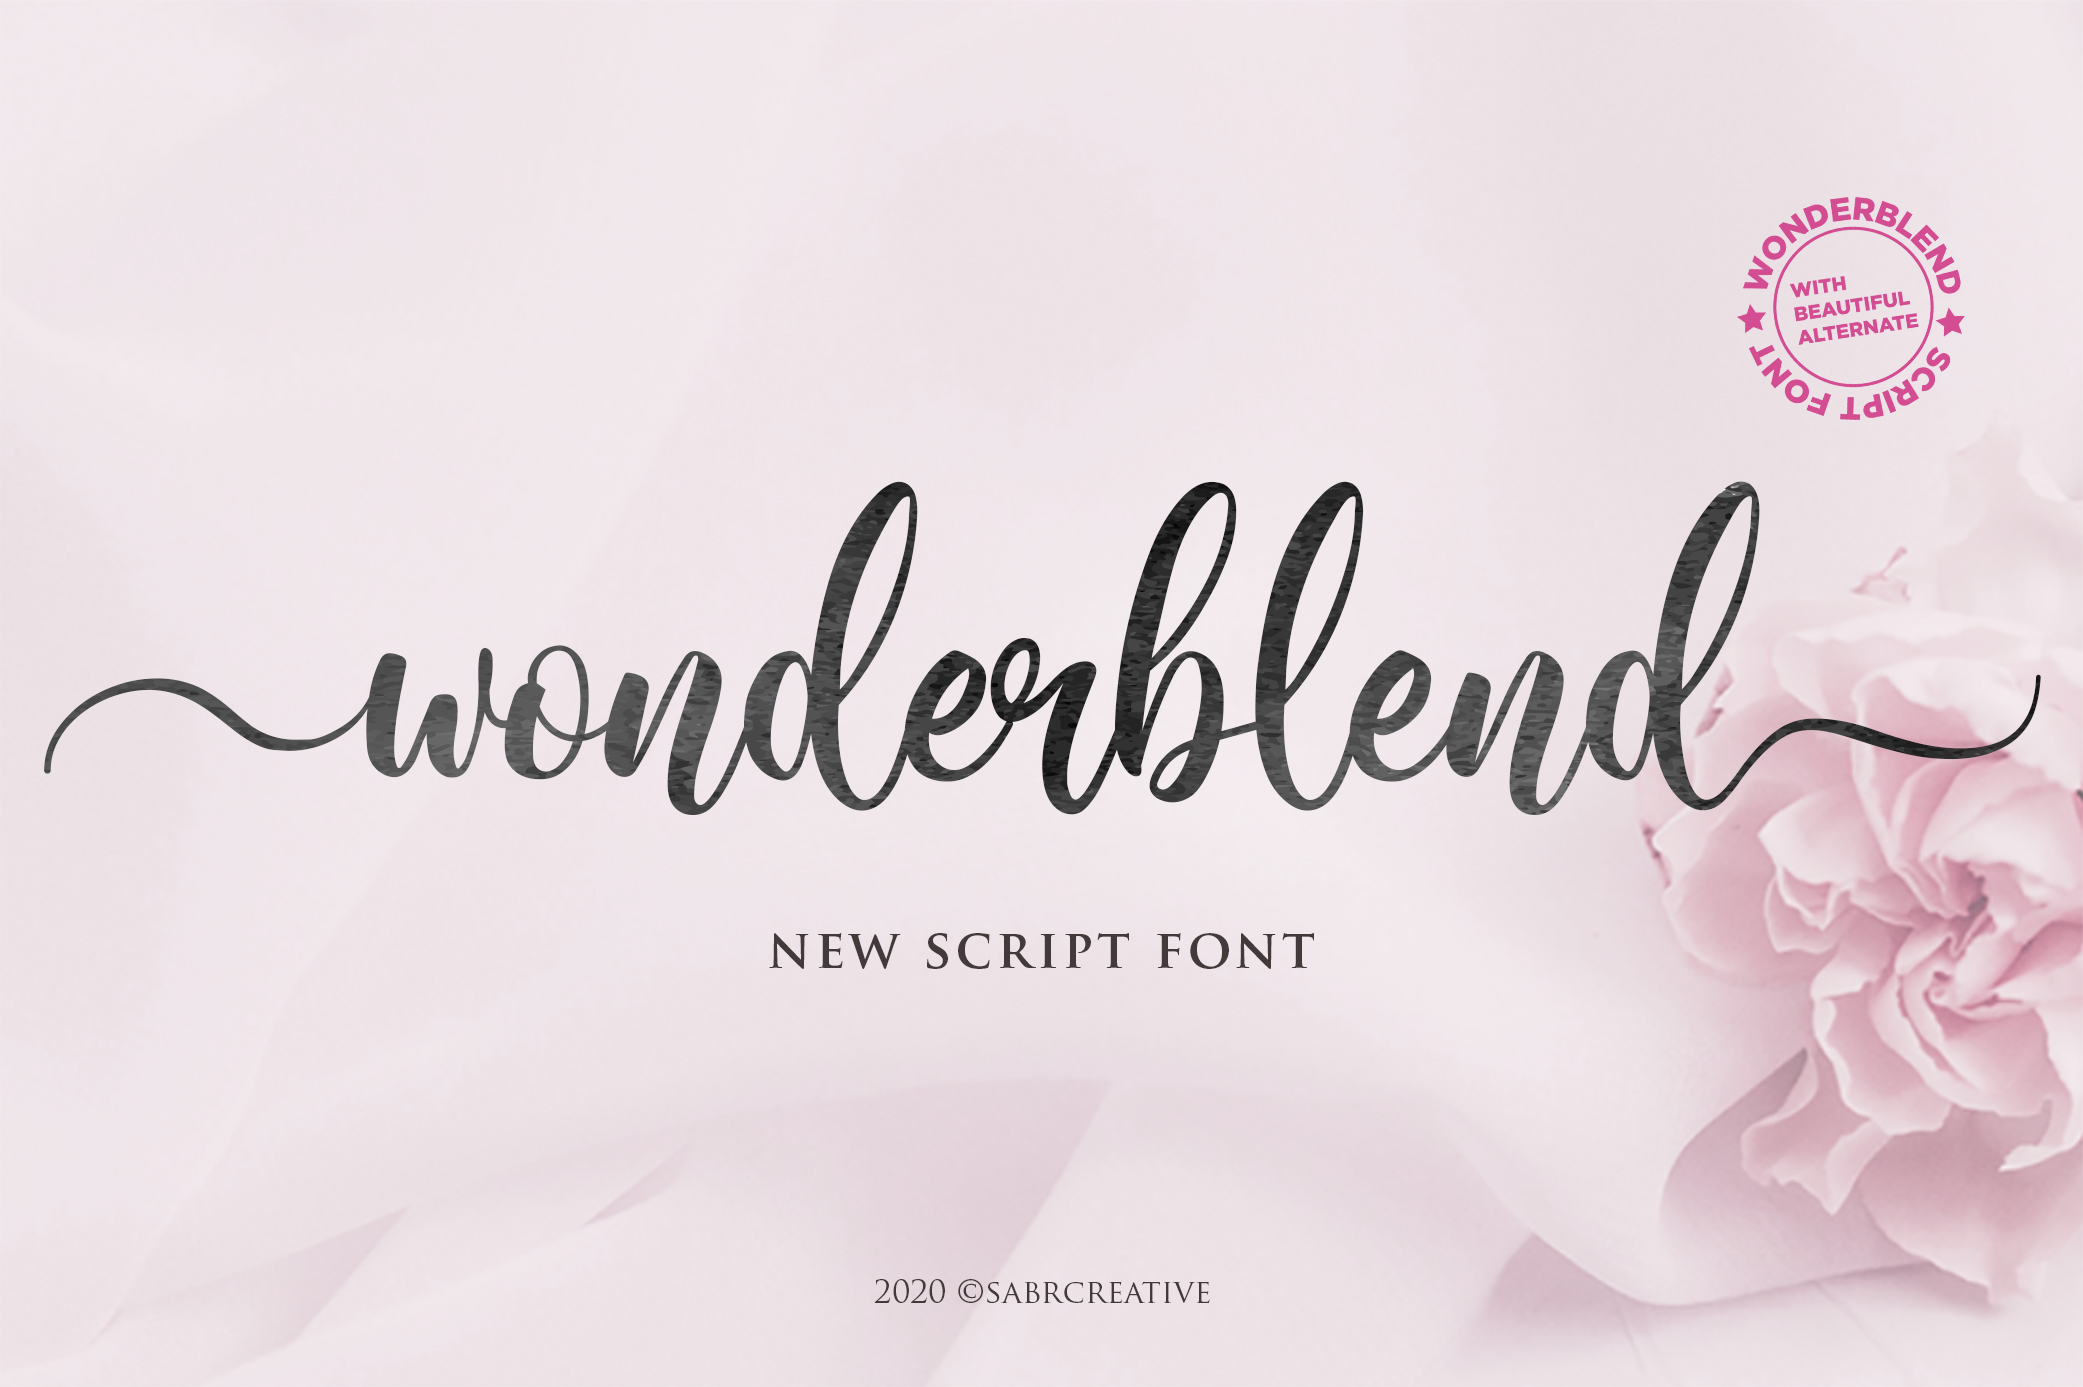 Wonderblend Free Font